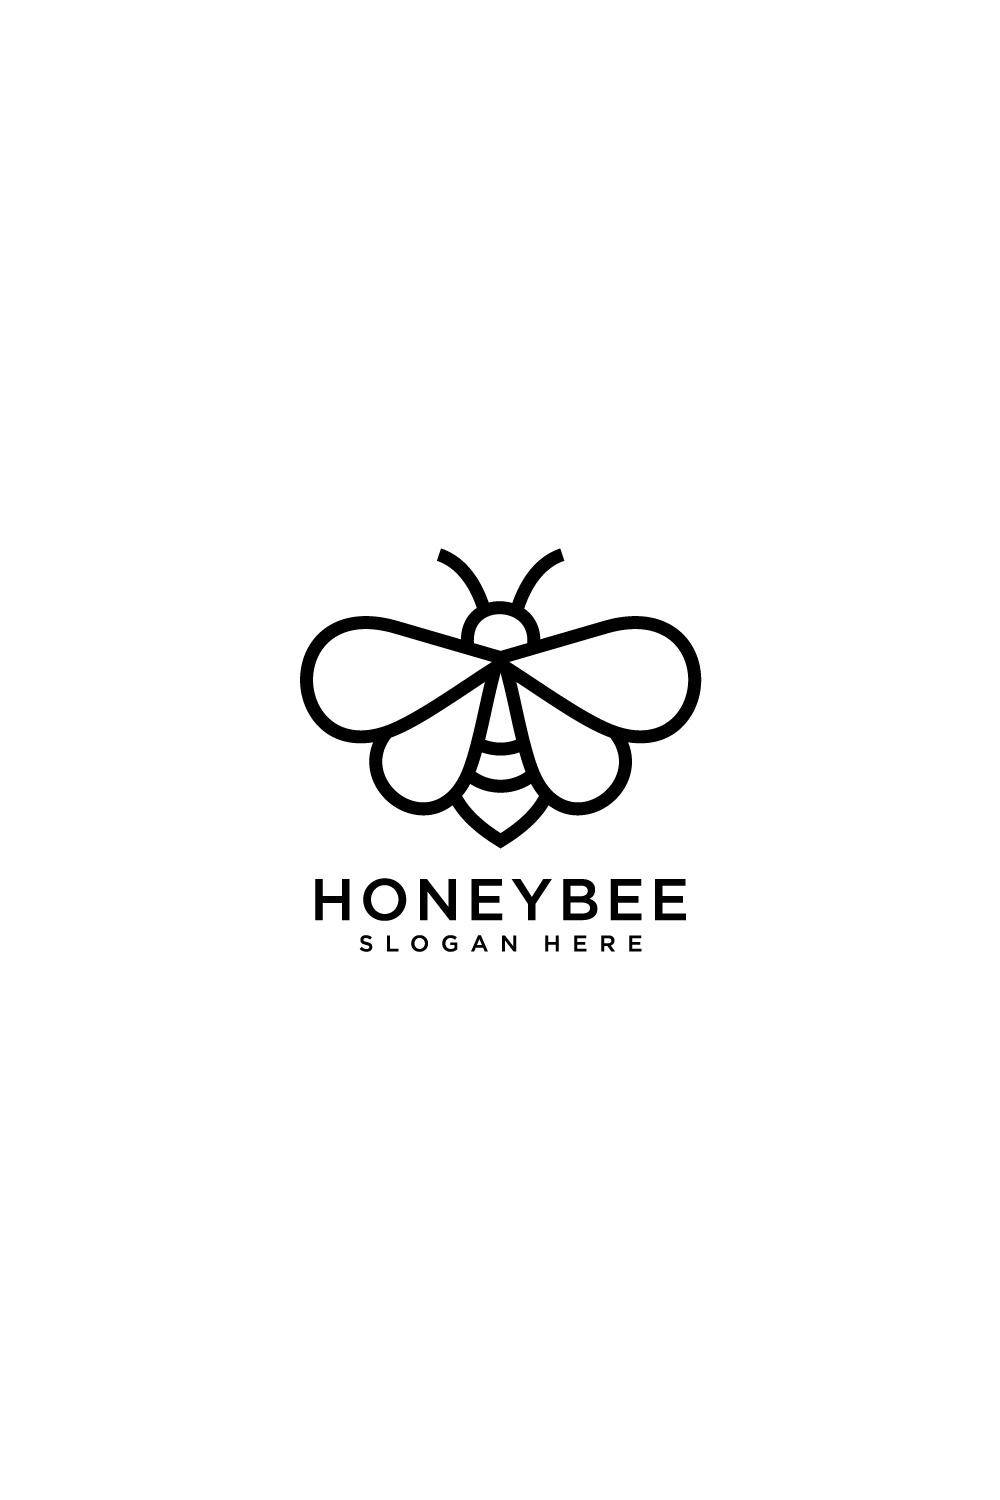 honey bee animal logo pinterest preview image.